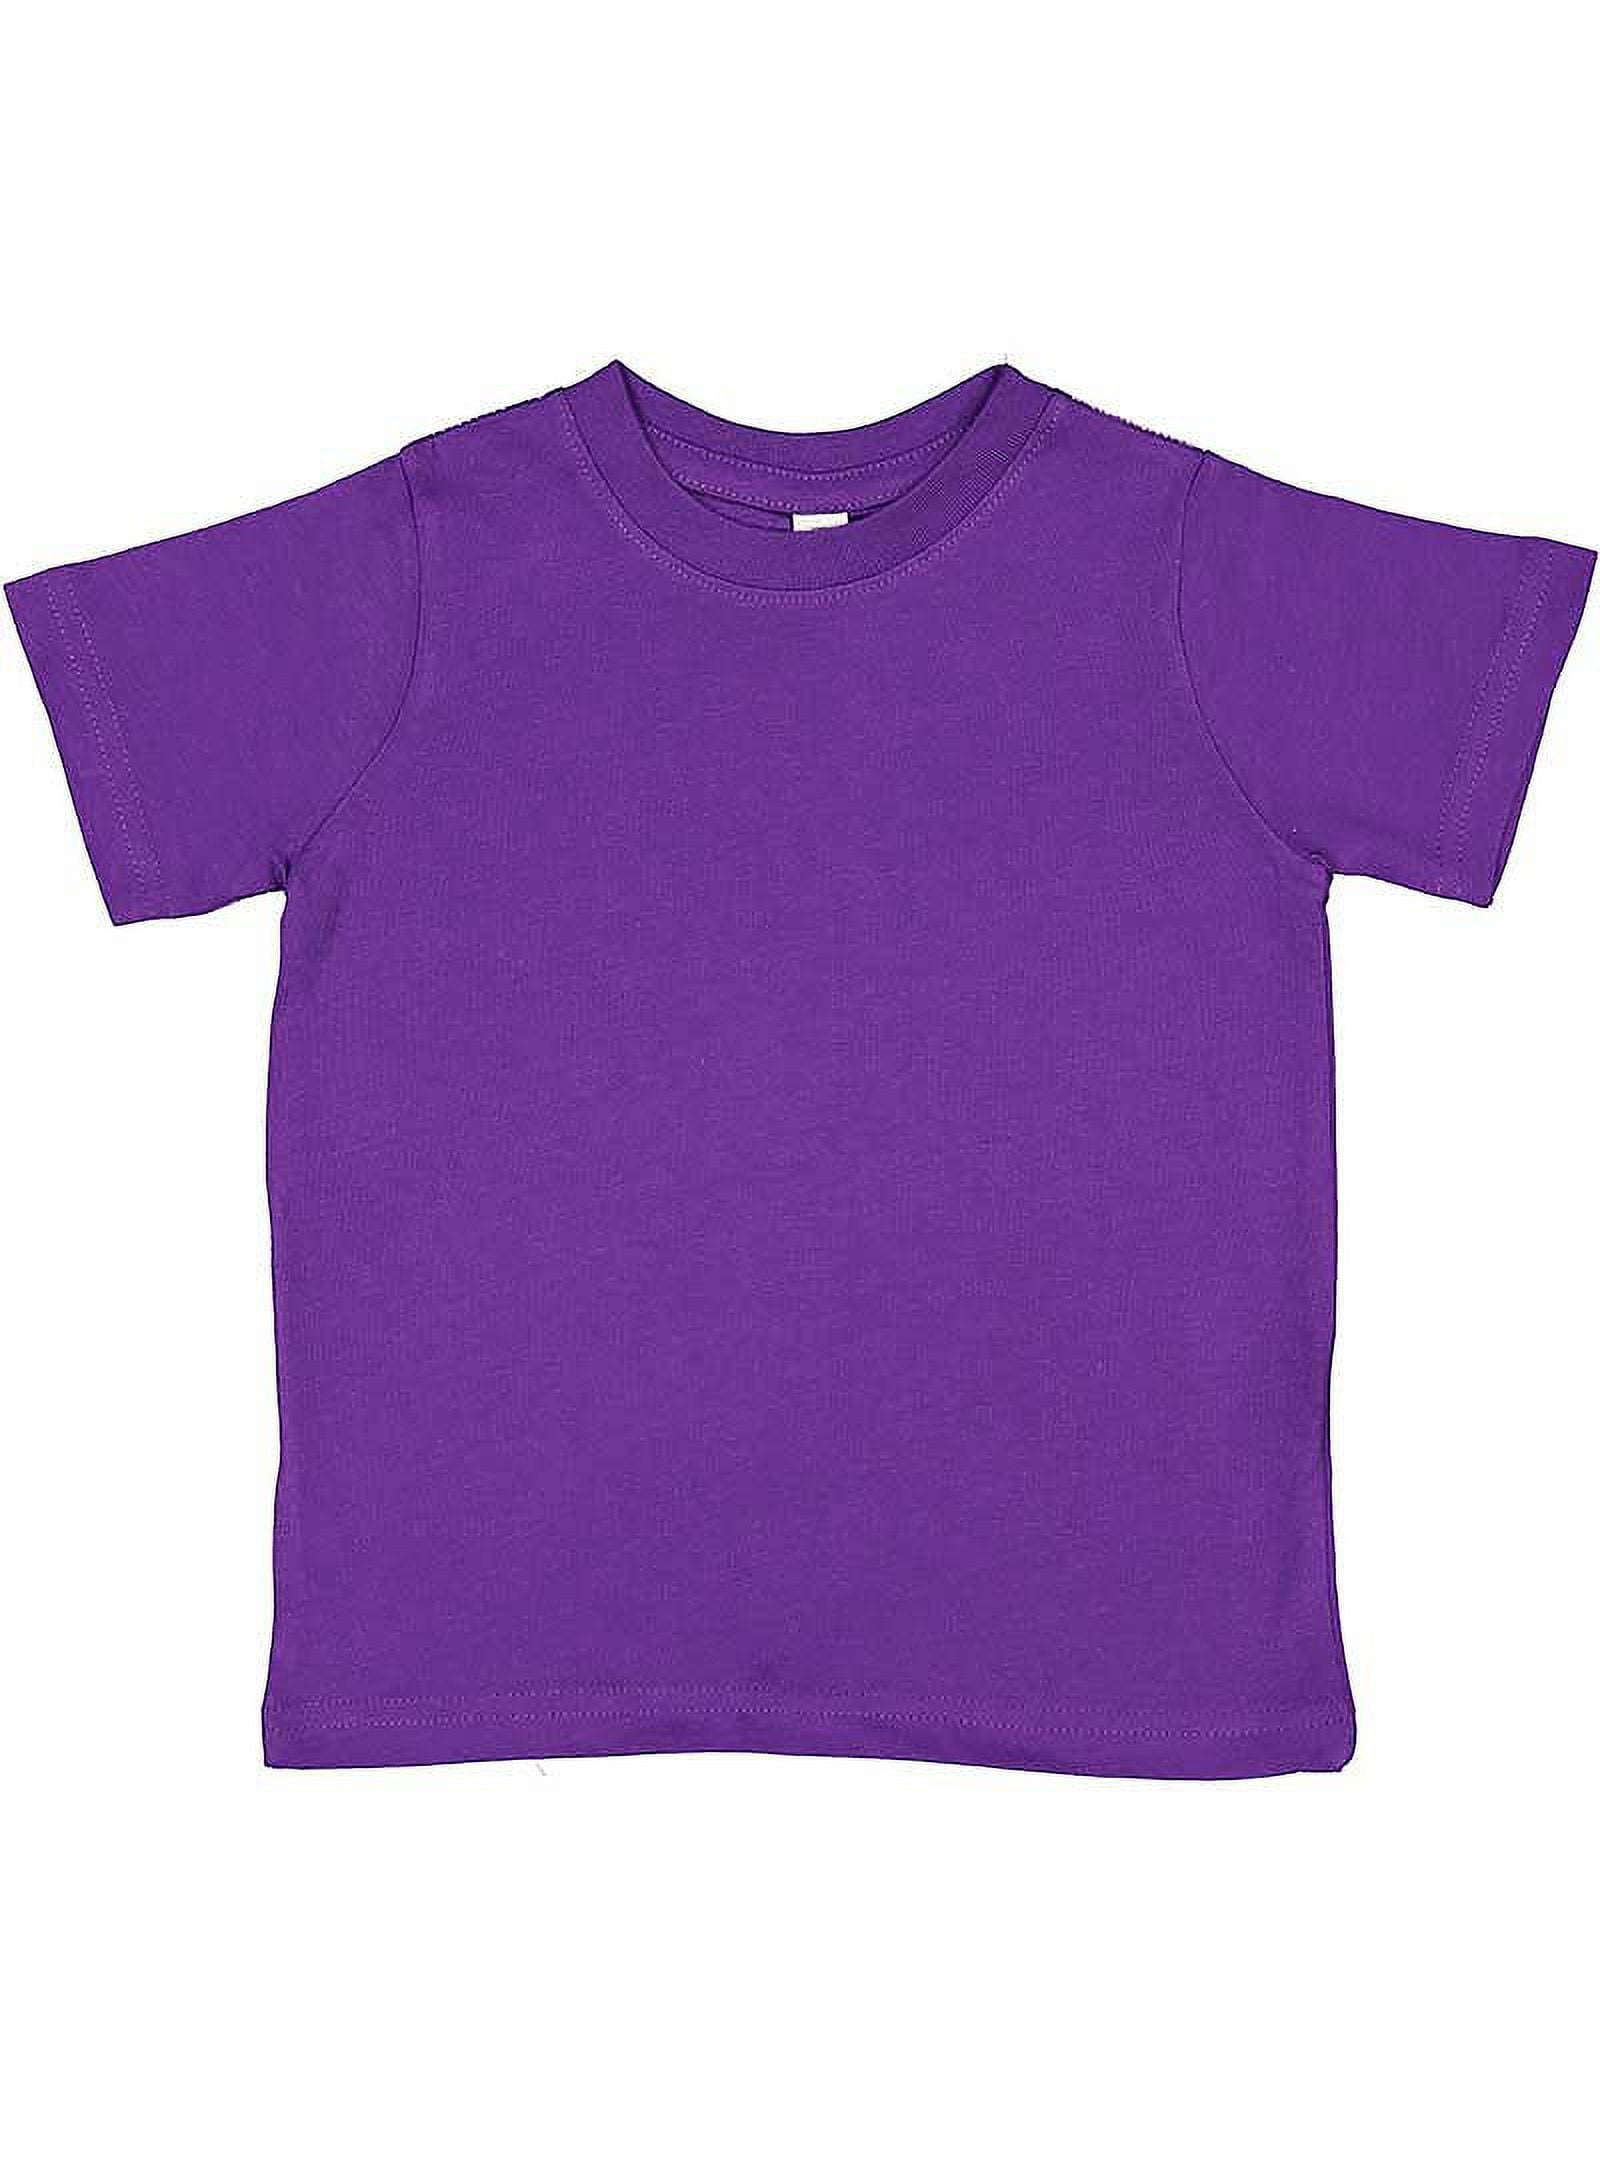 Toddler Fine Jersey T-Shirt 2T PRO PURPLE